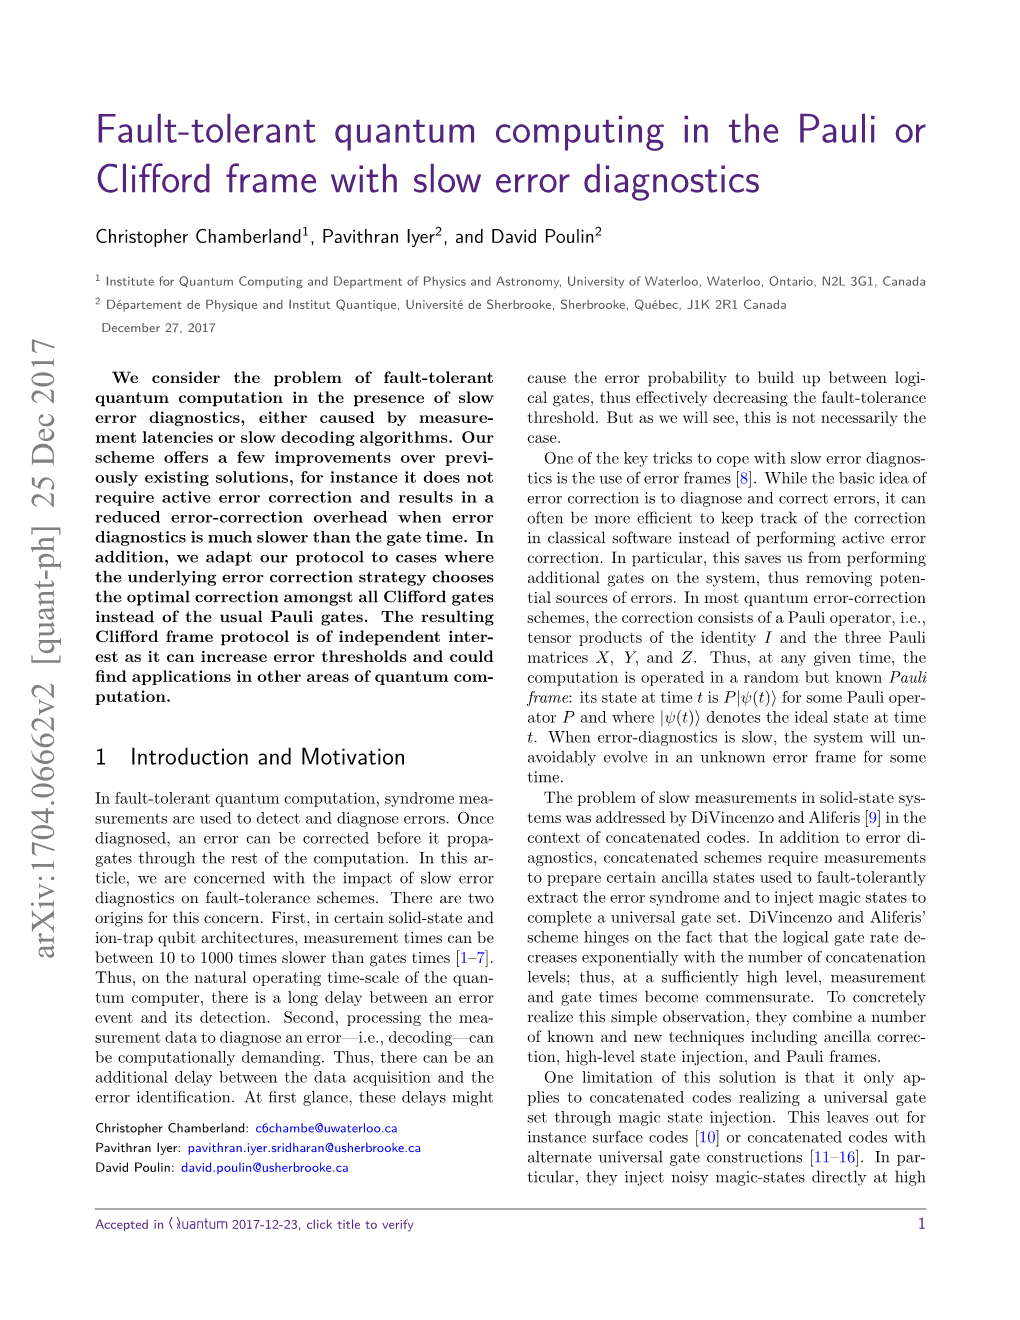 Fault-Tolerant Quantum Computing in the Pauli Or Clifford Frame with Slow Error Diagnostics